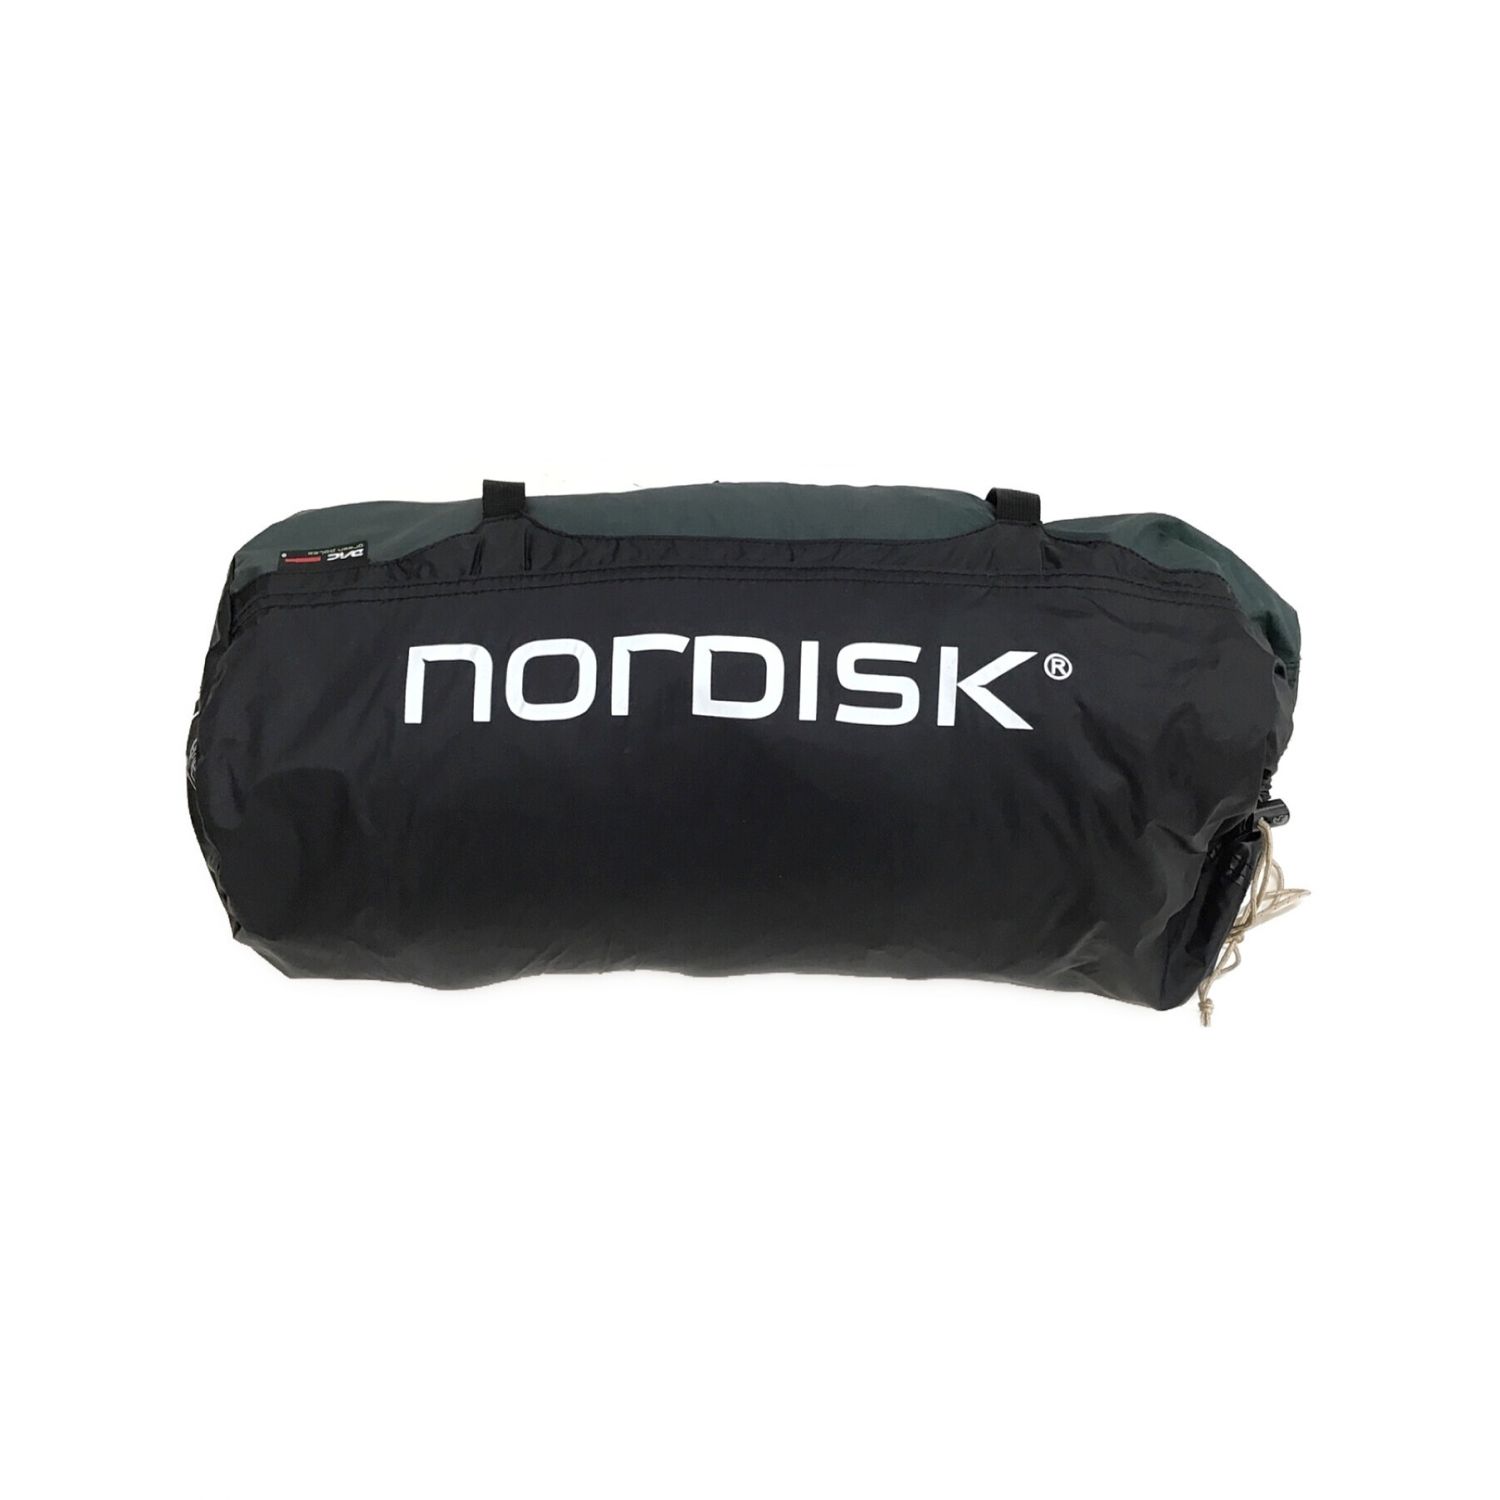 Nordisk (ノルディスク) ツーポールテント Faxe 4 SI グリーン 112031